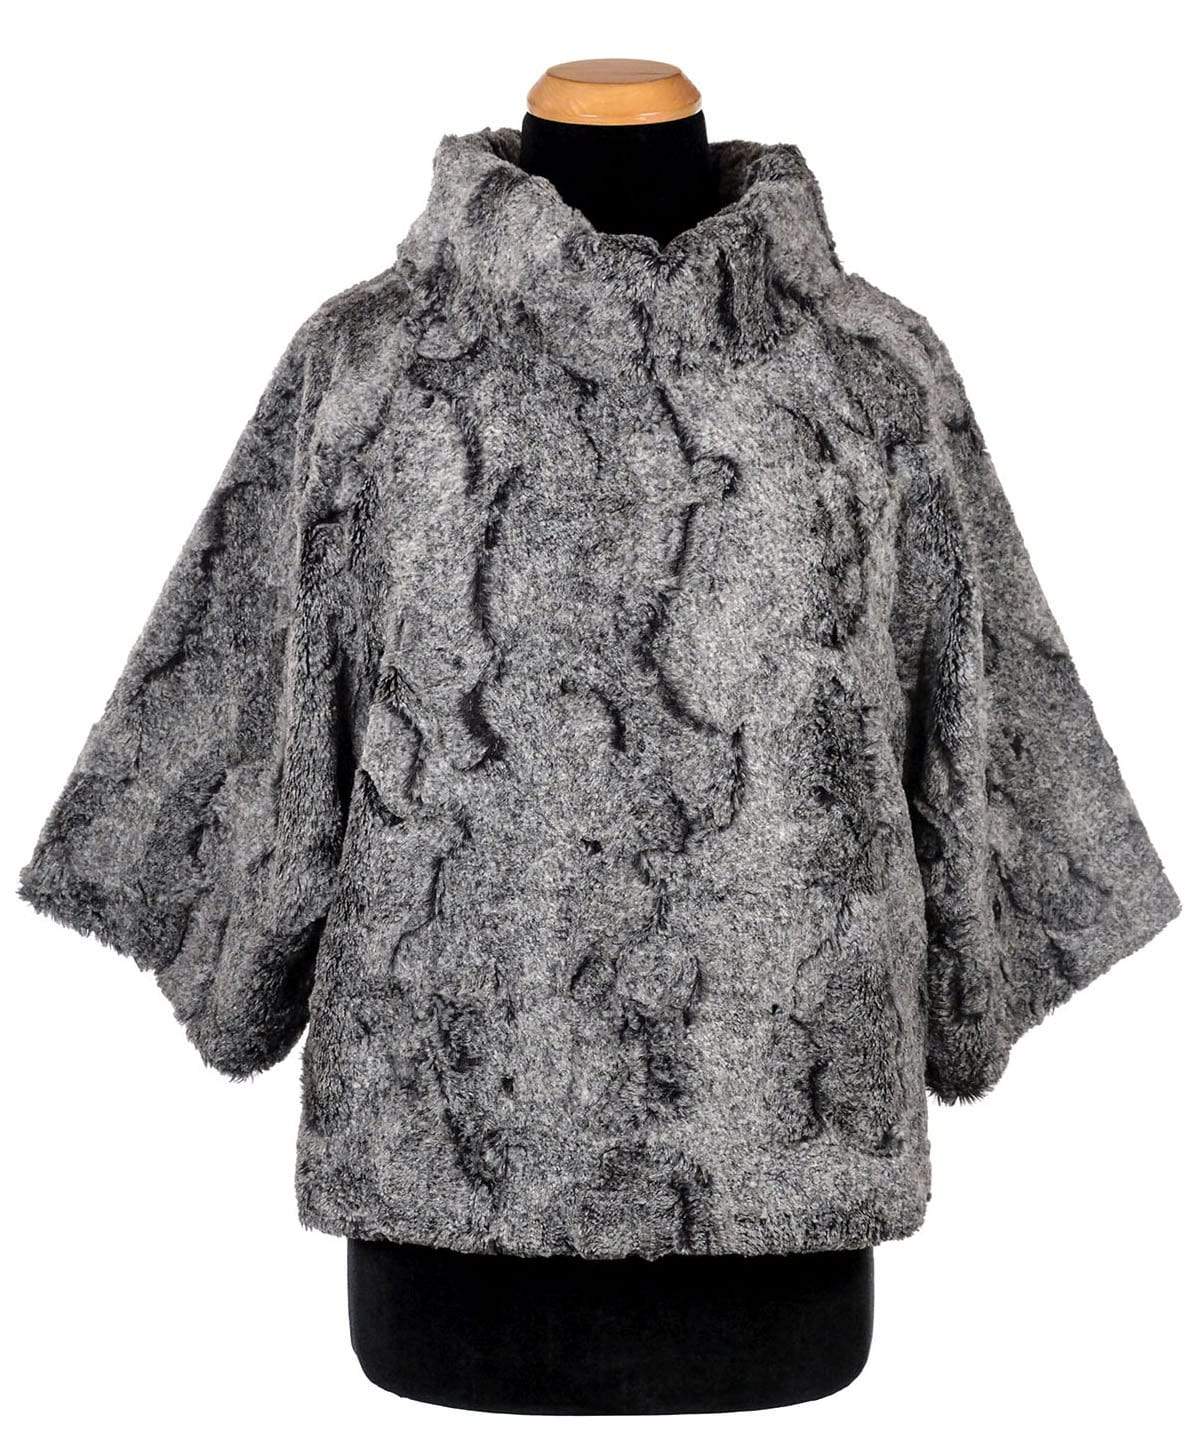 Sweater Top - Luxury Faux Fur in Nimbus